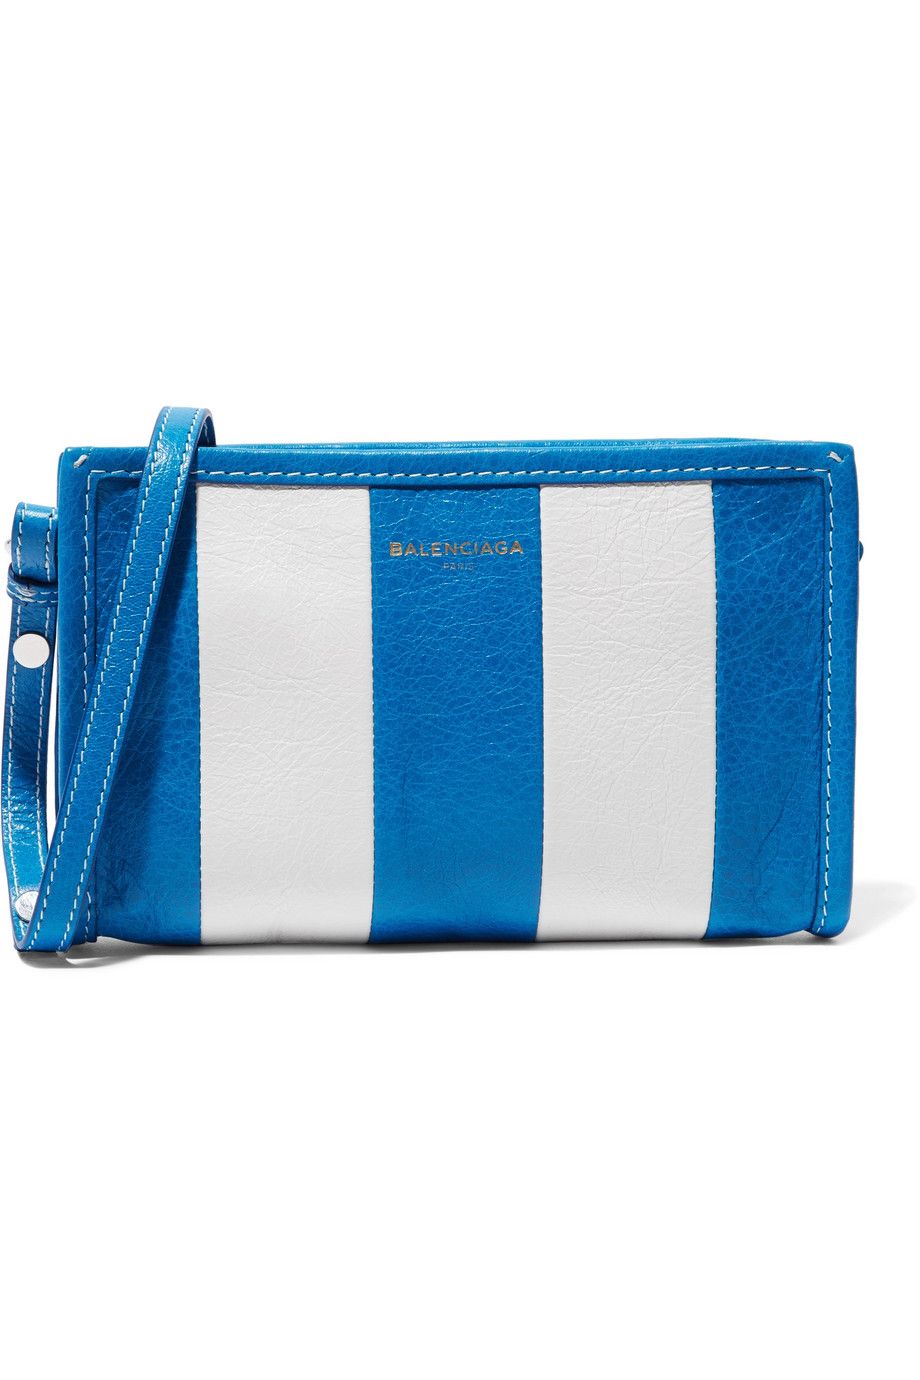 Wallet, Blue, Turquoise, Electric blue, Cobalt blue, Fashion accessory, Wristlet, Material property, Bag, Pencil case, 